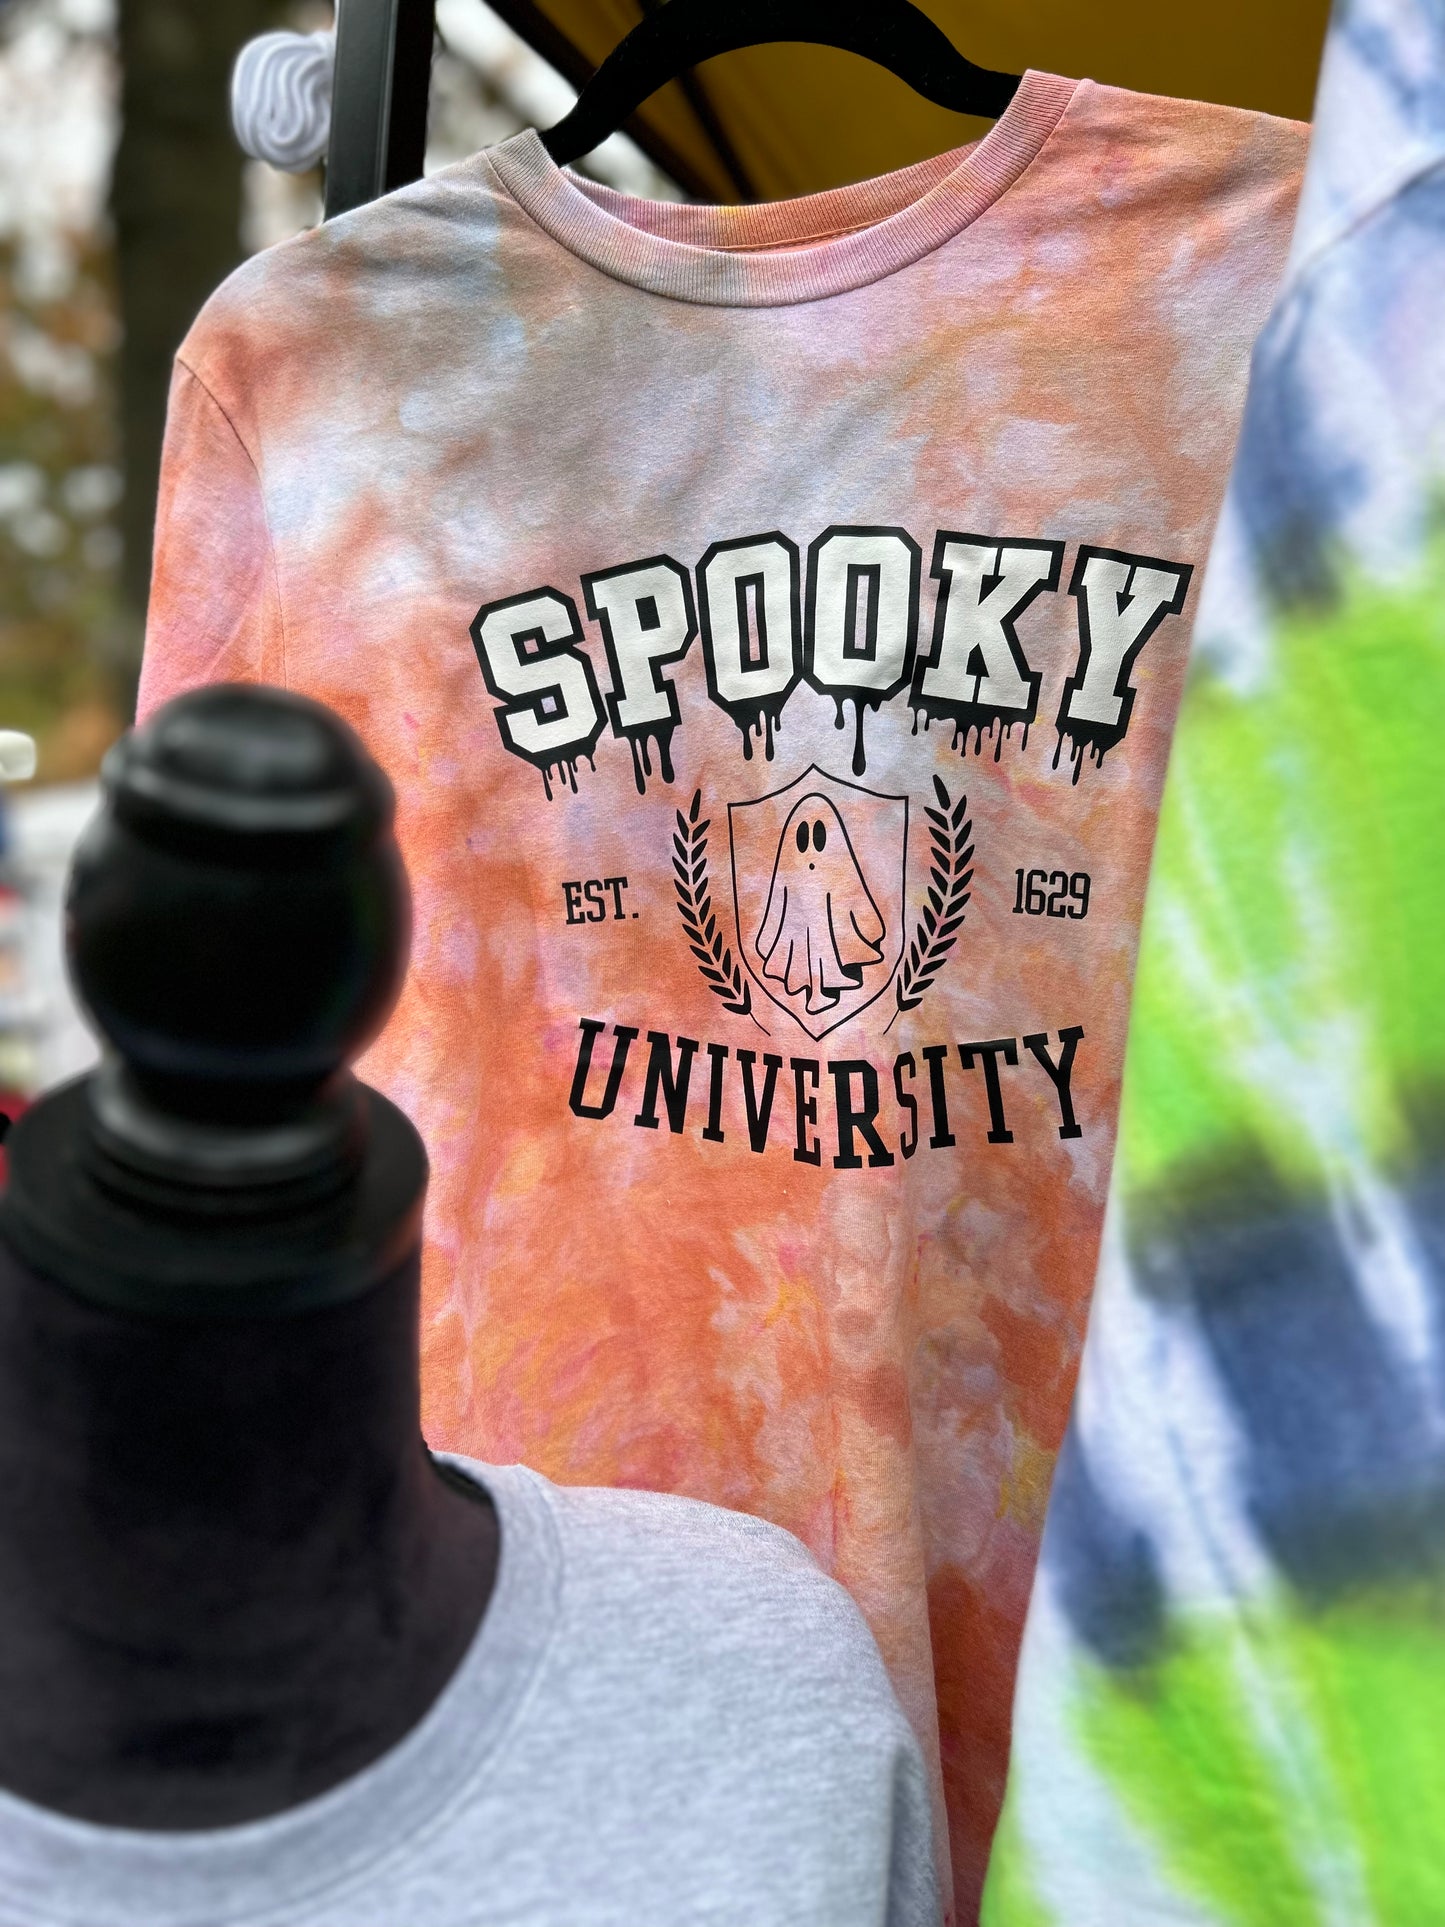 Spooky university tee